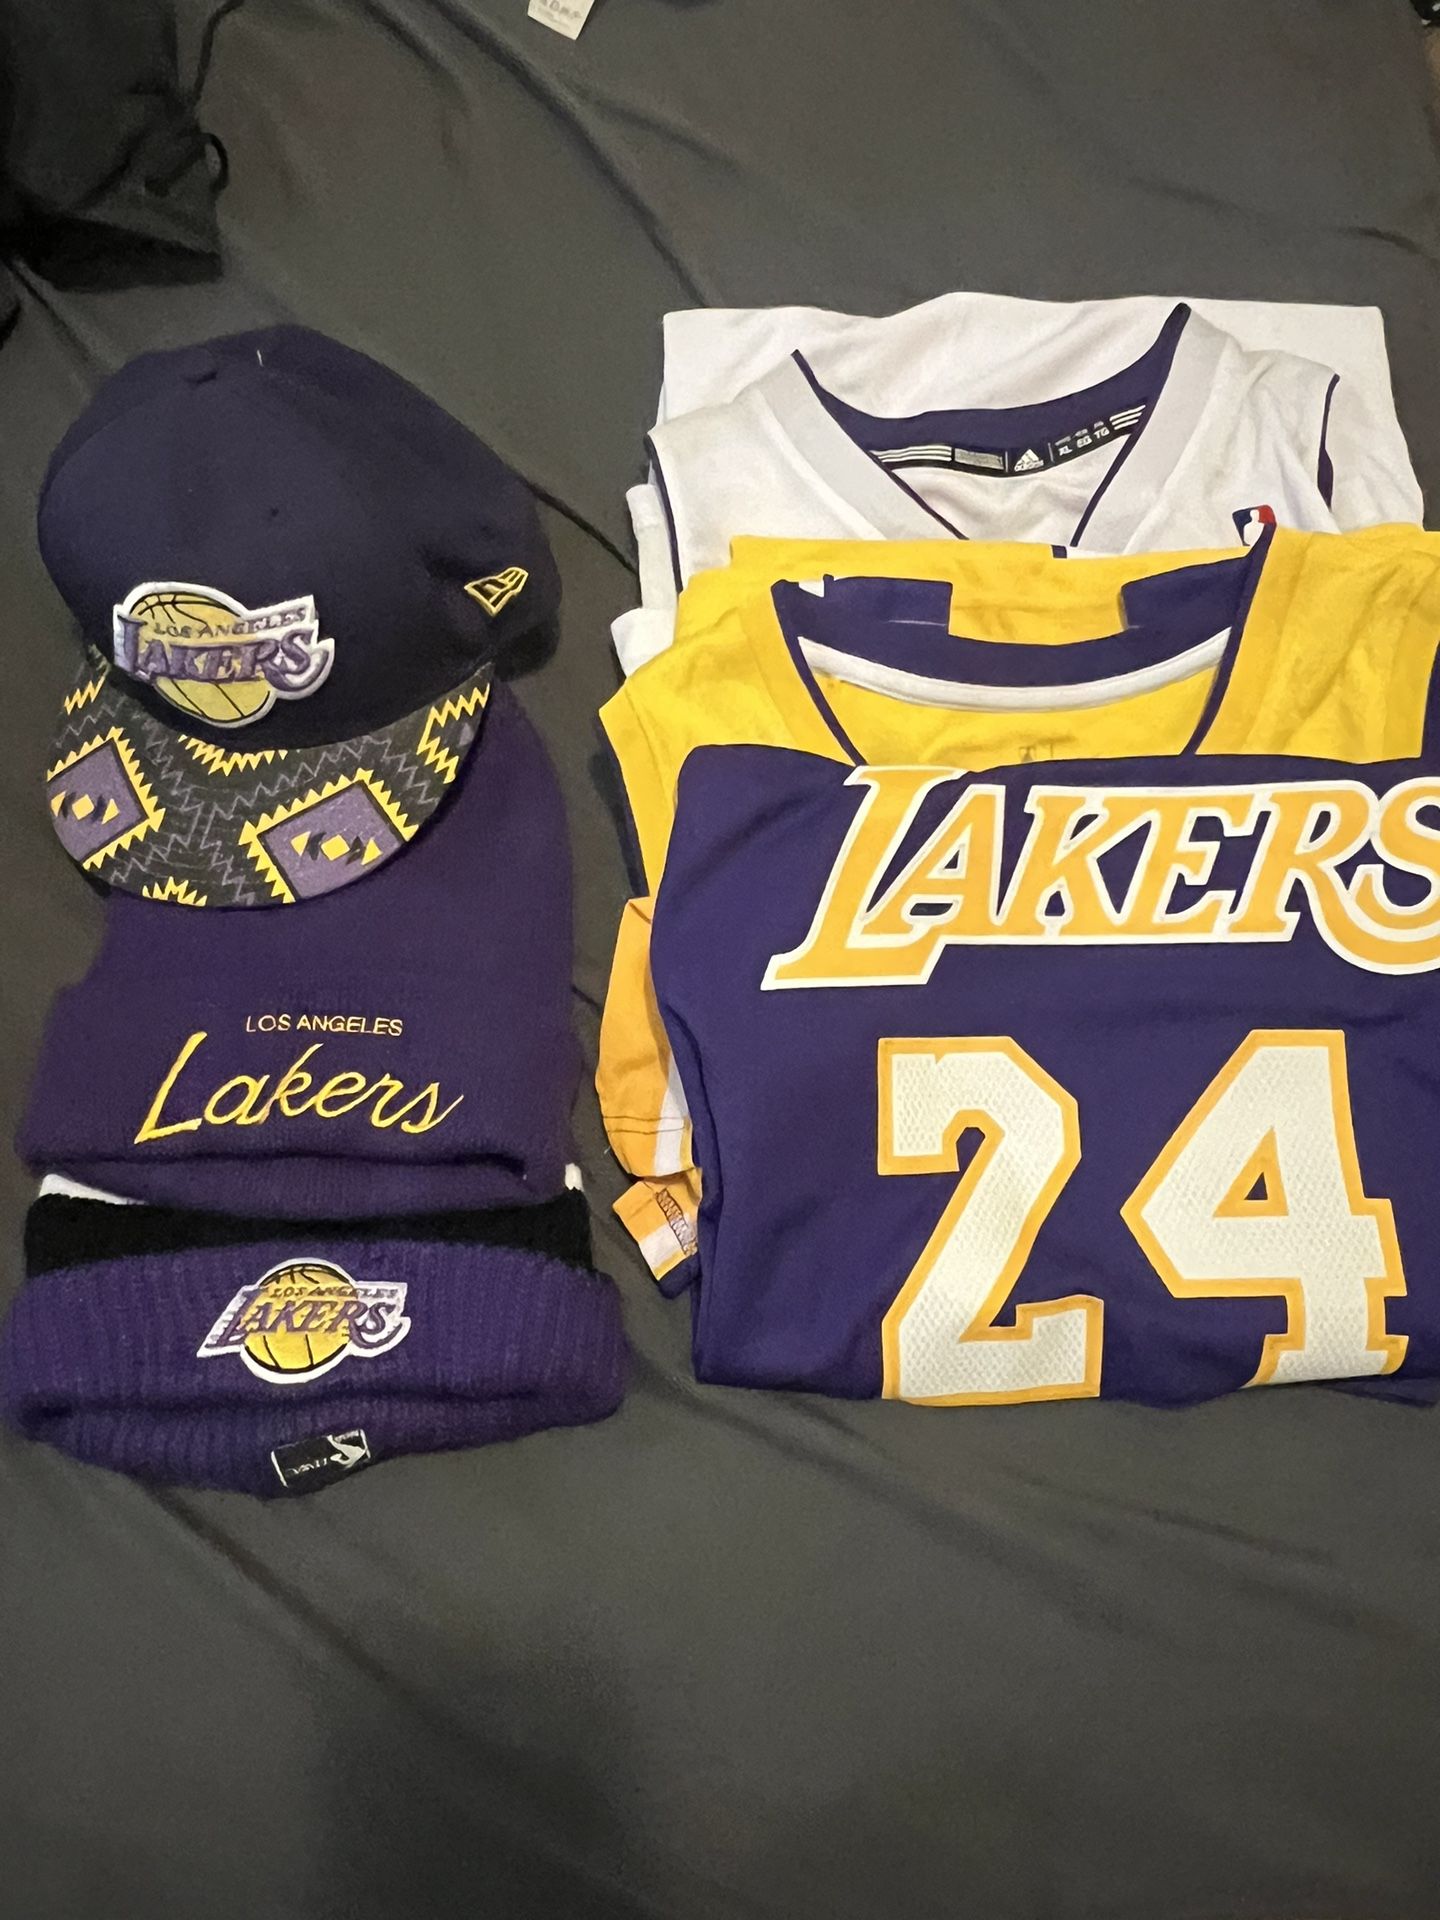 LA Lakers Jerseys Clothing Etc